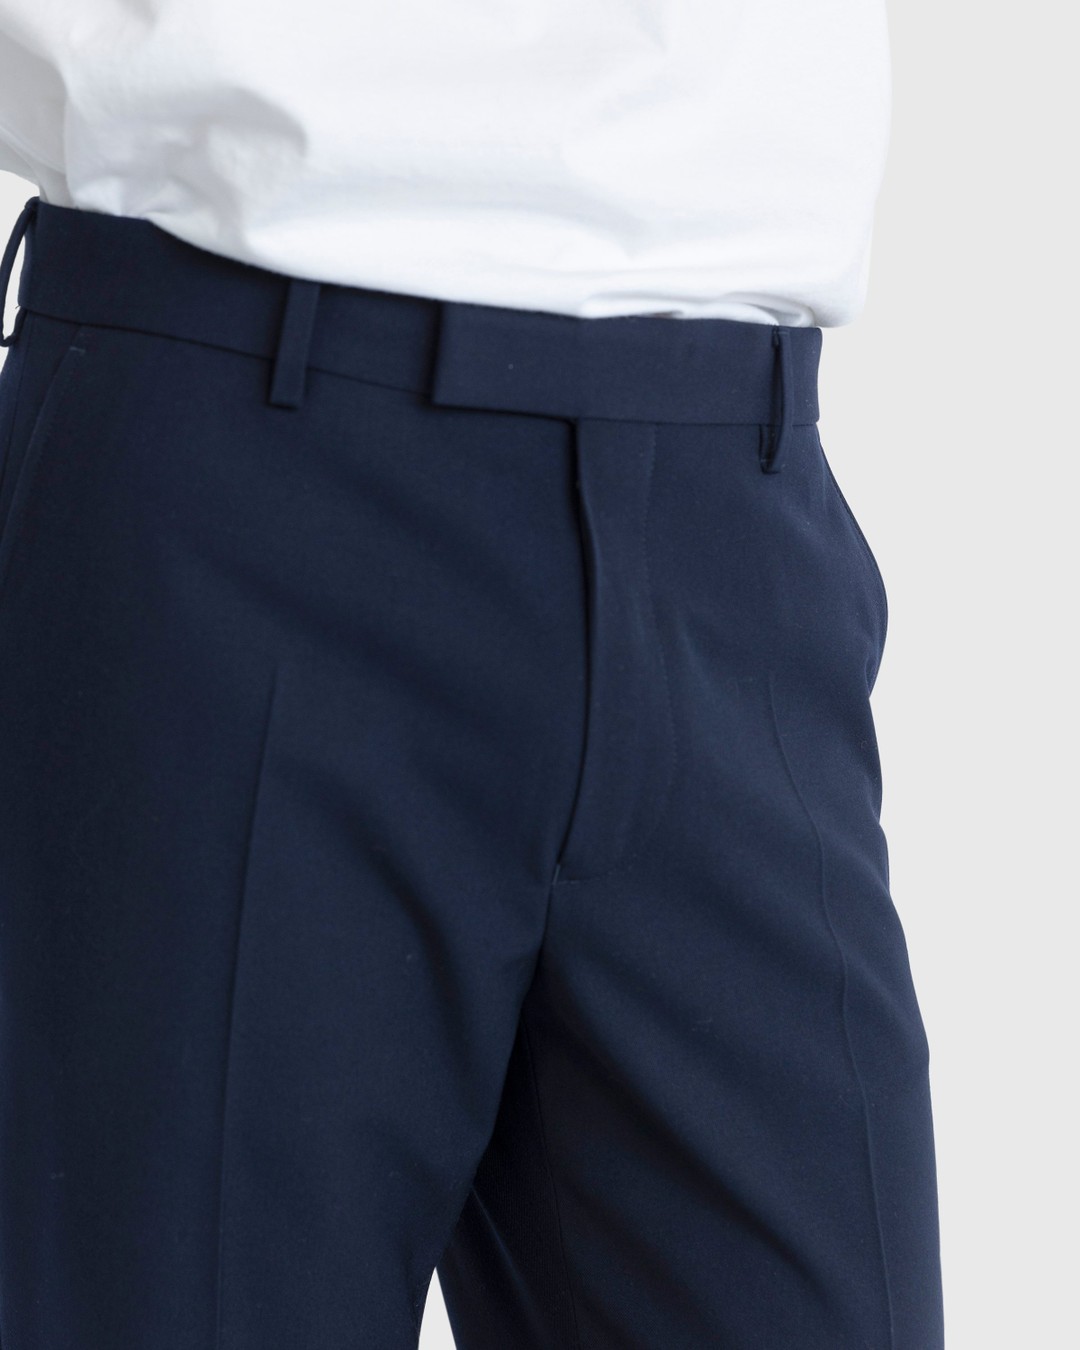 Dries van Noten – Pinnet Long Pants Blue - Trousers - Blue - Image 5